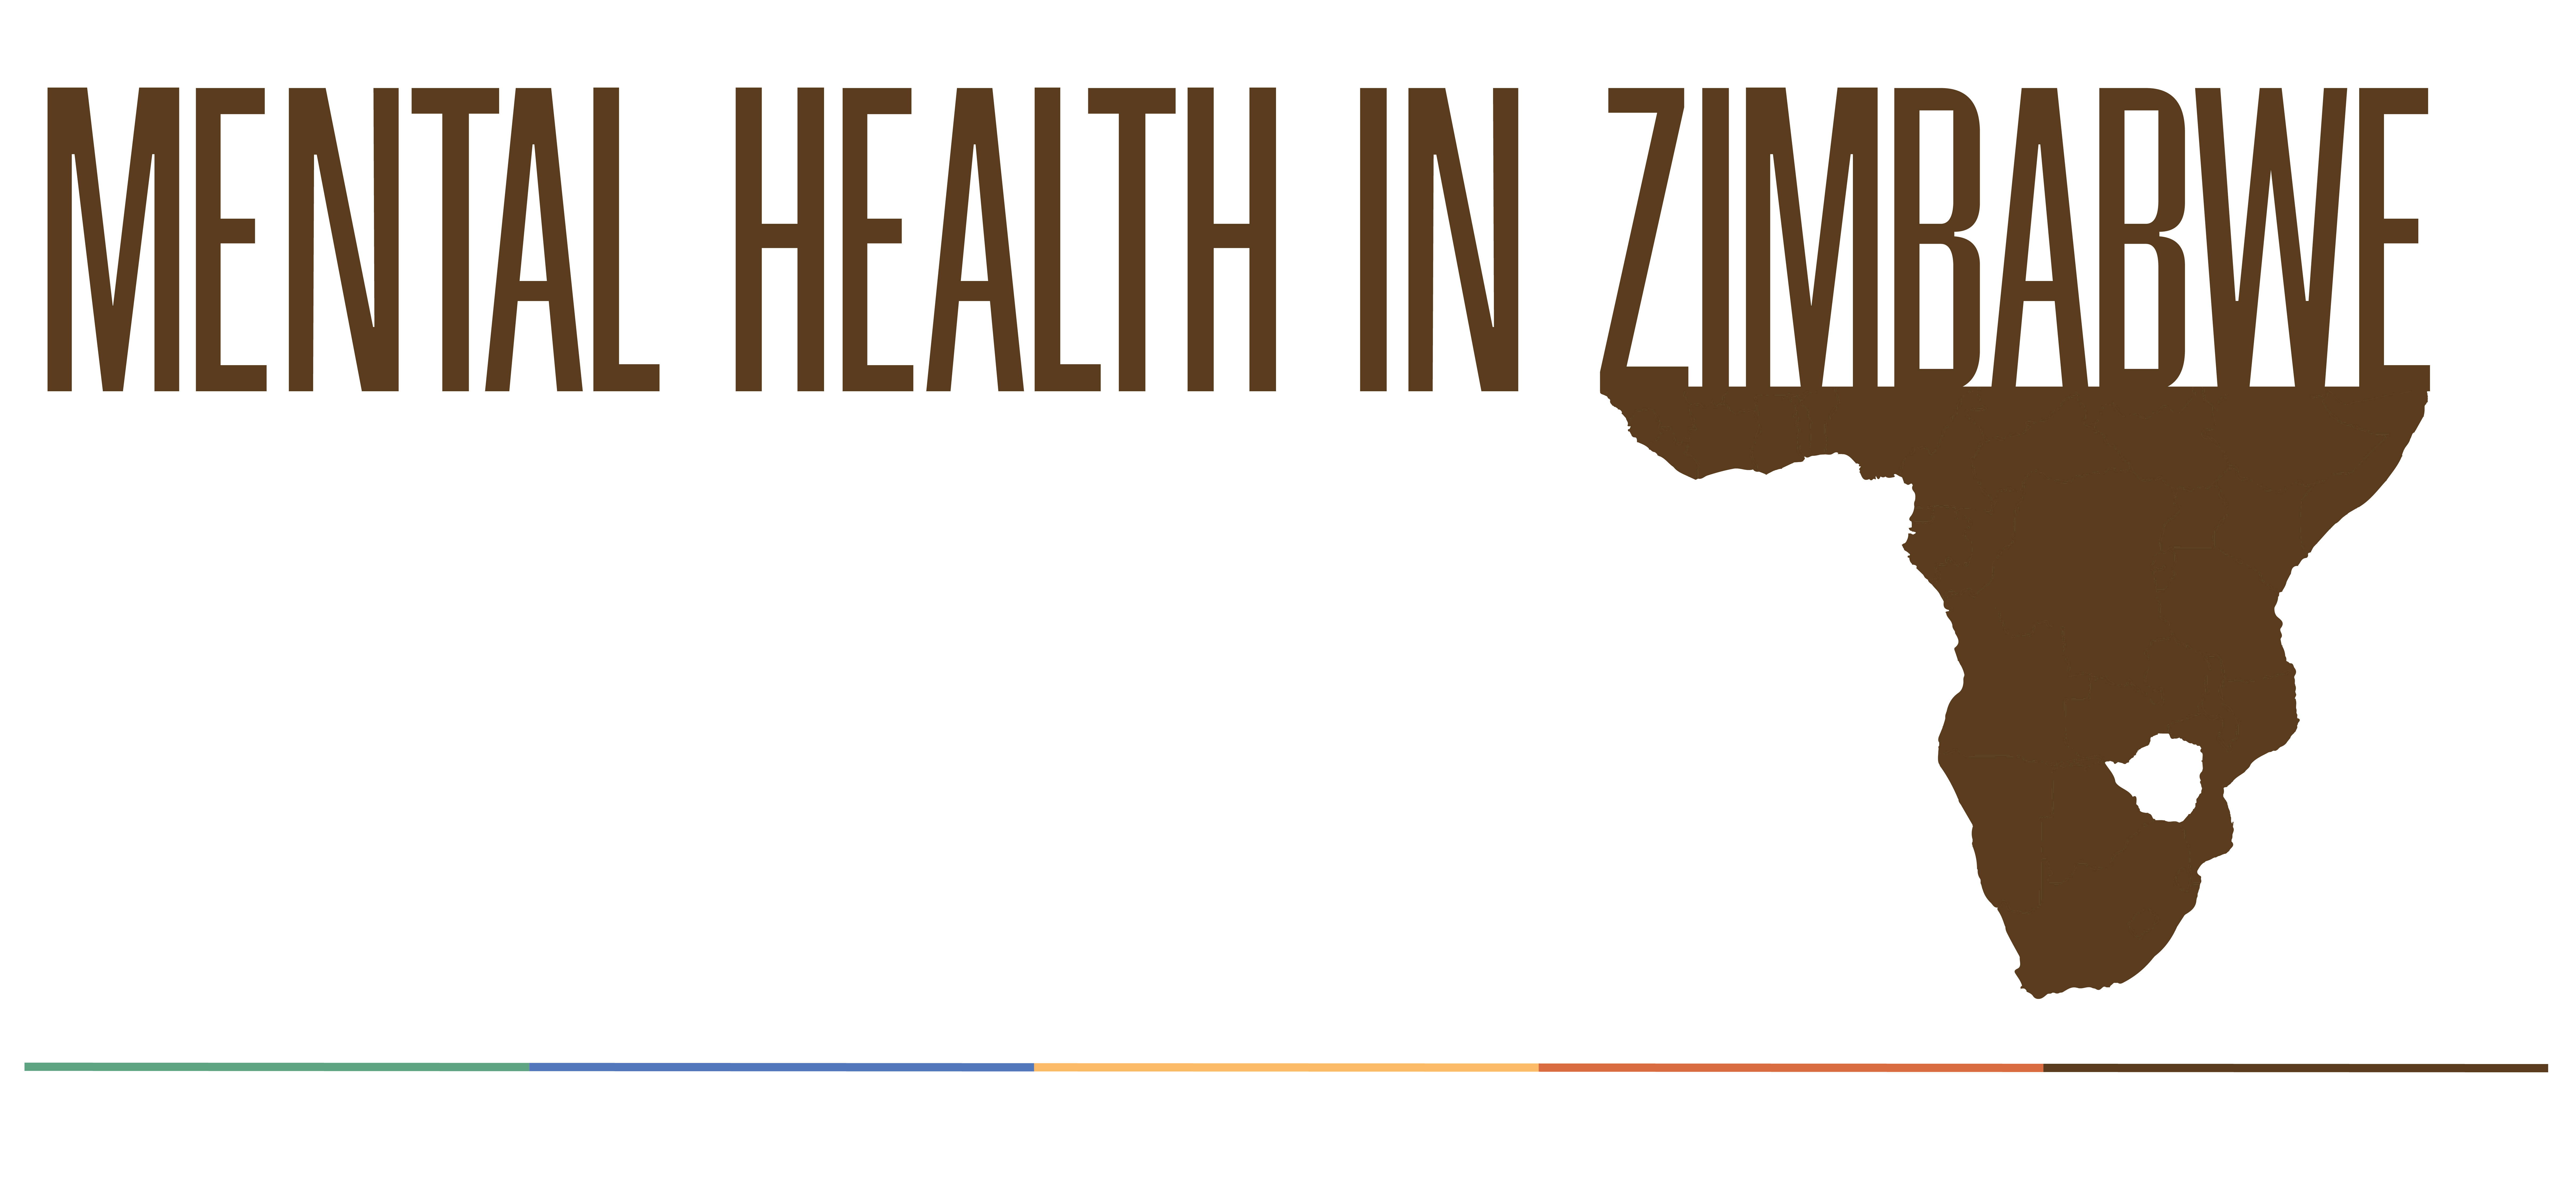 Mental Health in Zimbabwe